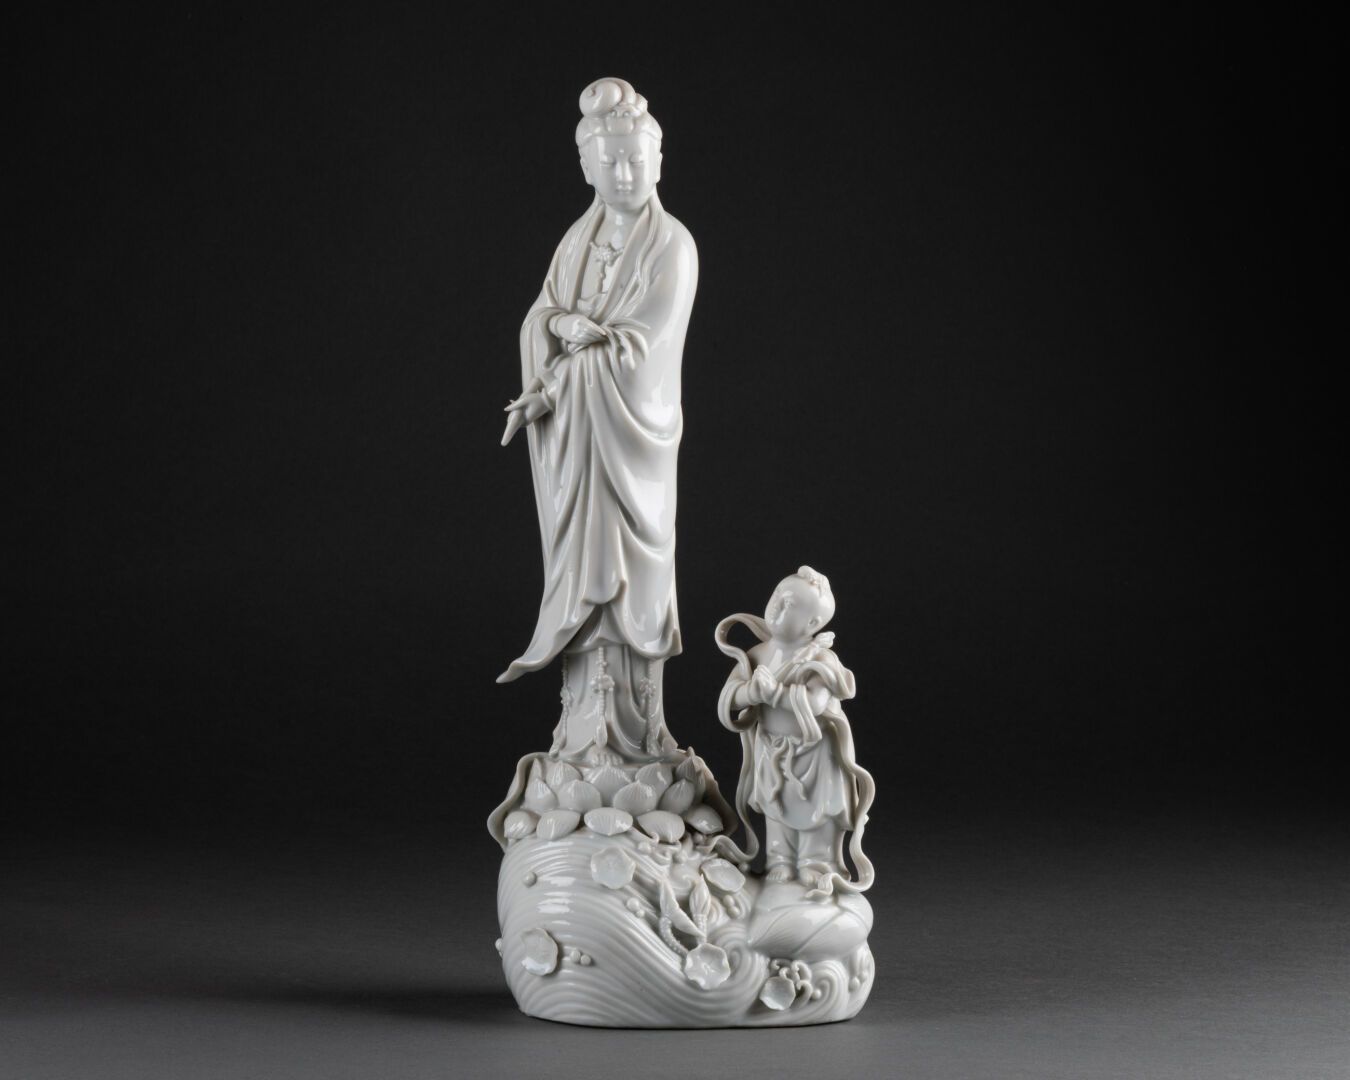 CHINE - Vers 1900 观音菩萨带着一个孩子站在莲花上

中国白 "瓷器

德化窑

背面有印记

H.31厘米

薯片